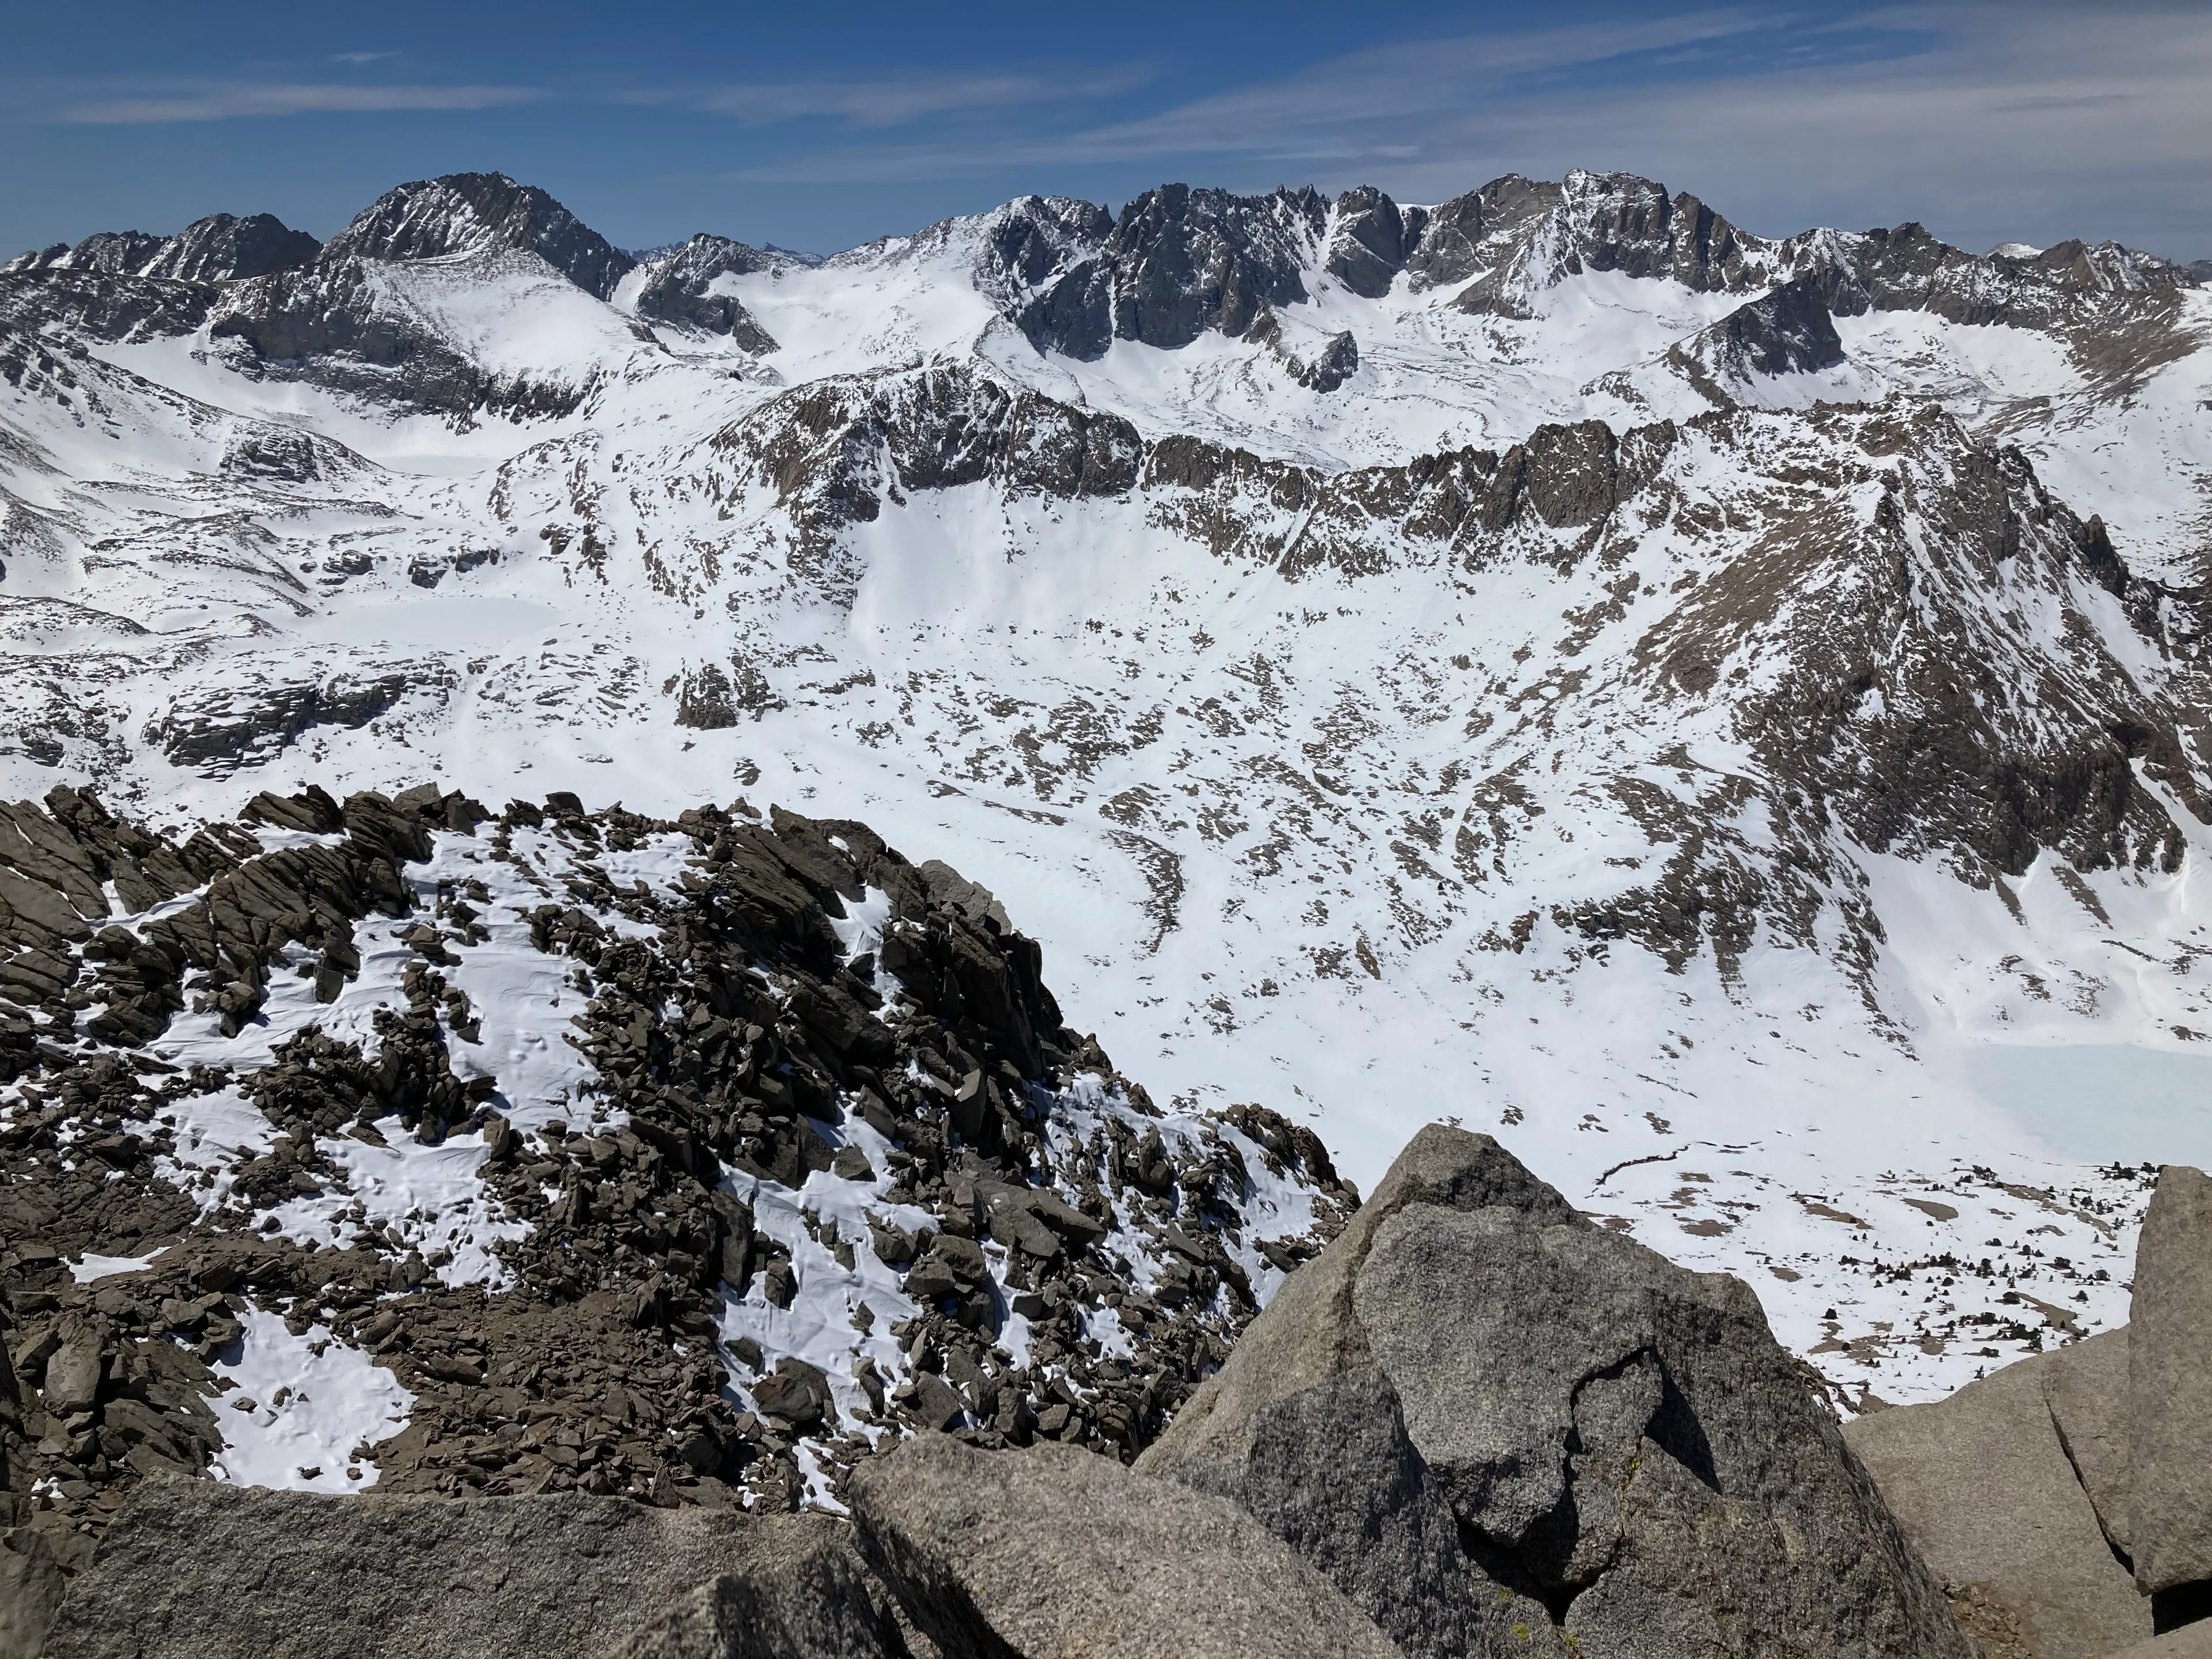 Junction Peak (L) and Center Peak (R, foreground)